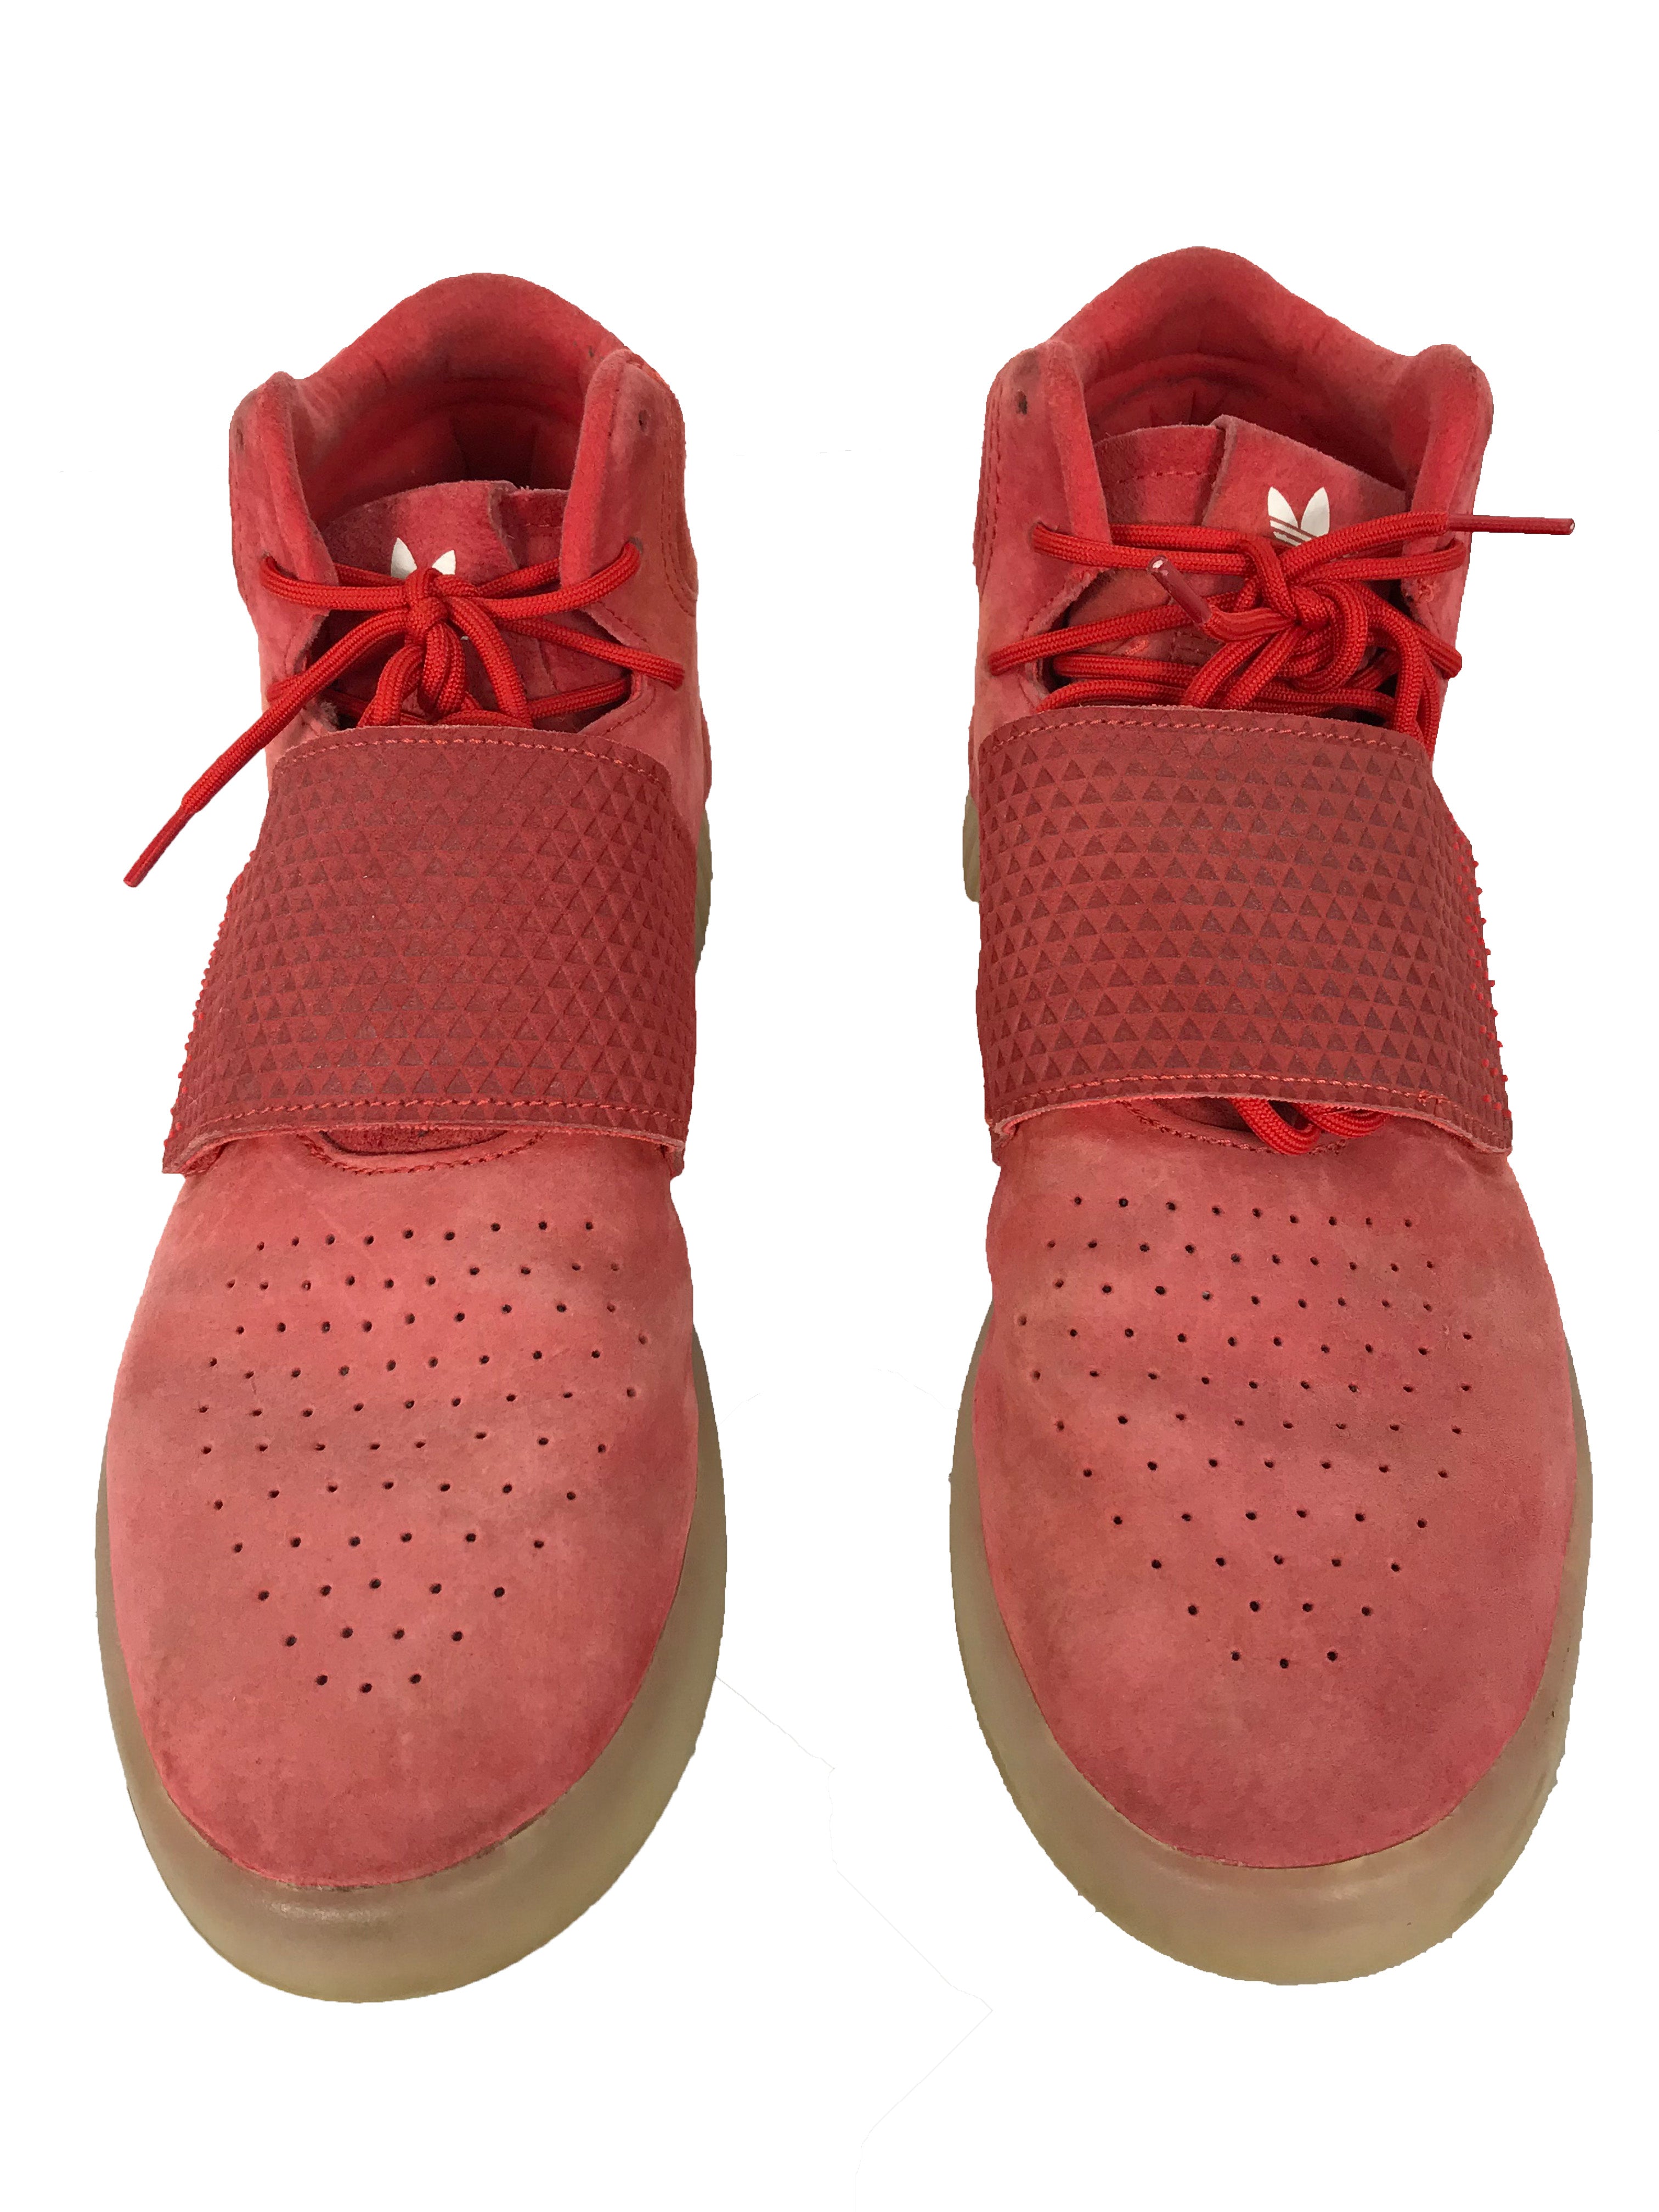 Adidas Red Tubular Invader High-Top Sneaker Men's Size 9